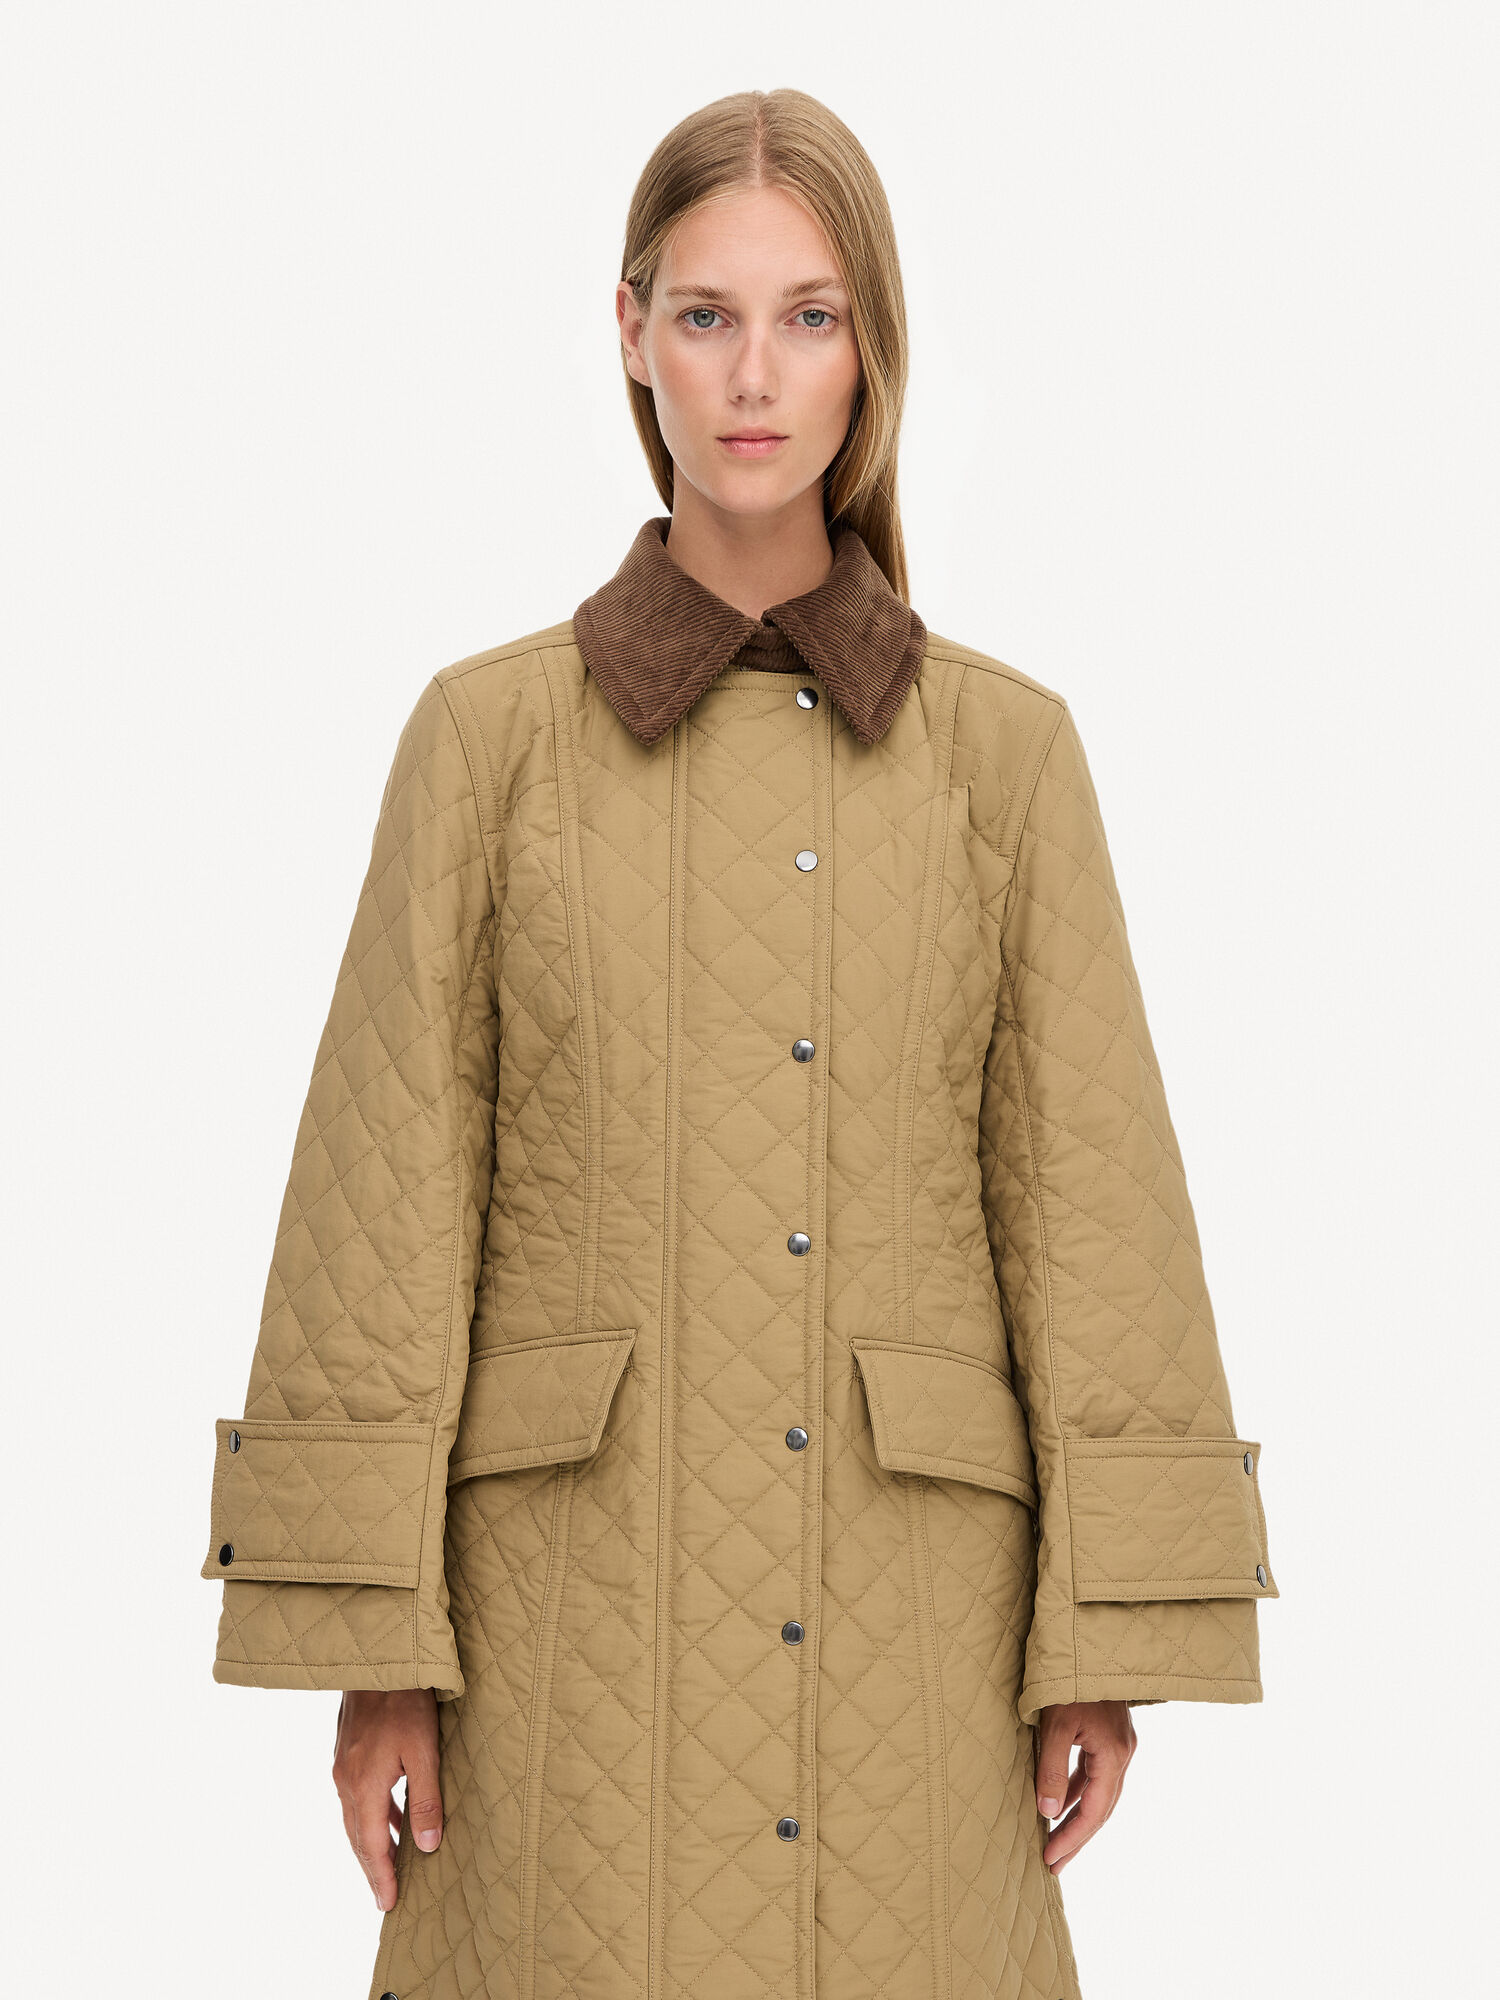 Pinelope coat